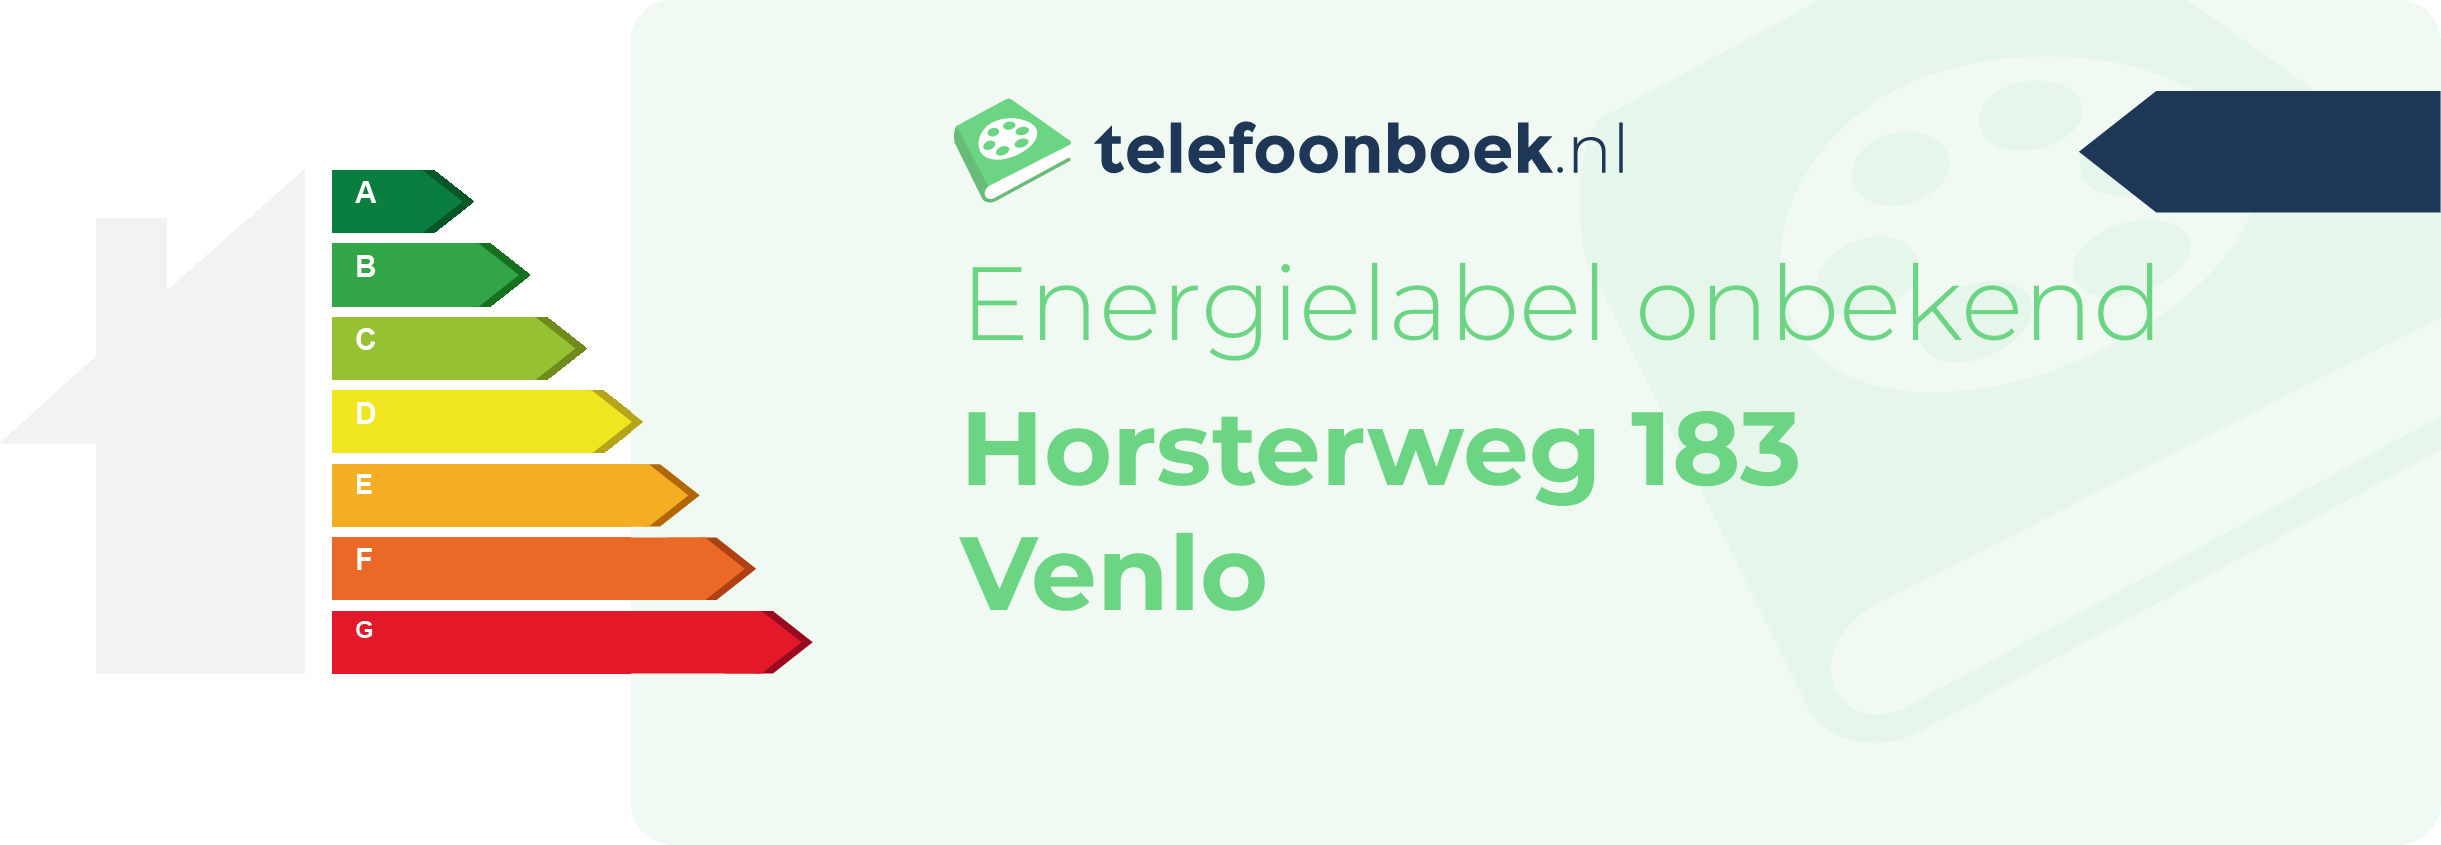 Energielabel Horsterweg 183 Venlo